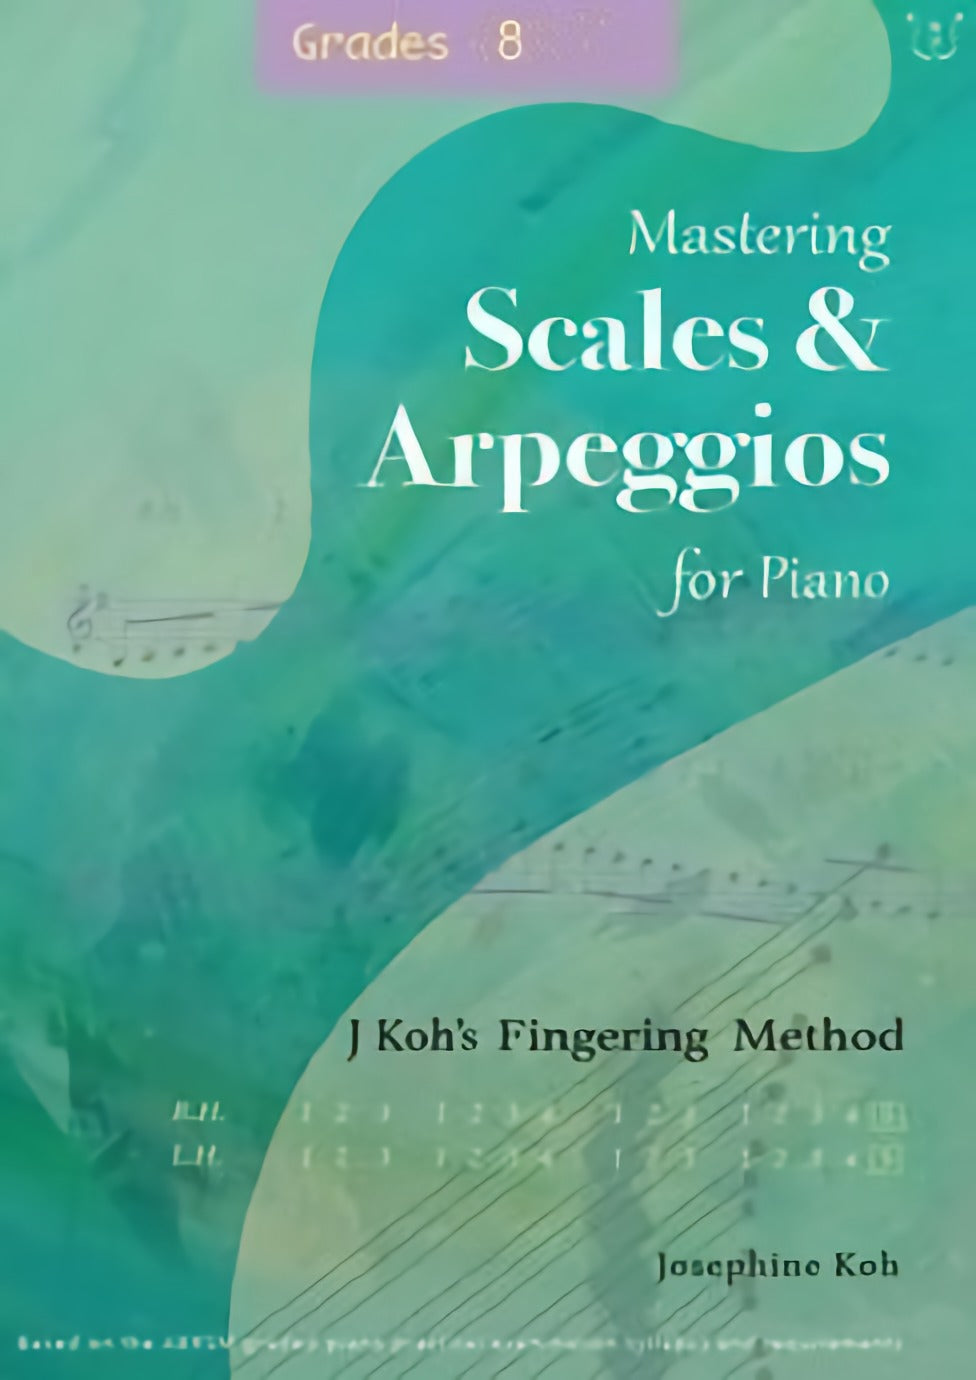 Mastering Scales and Arpeggios, J Koh's Fingering Method, Grades 8